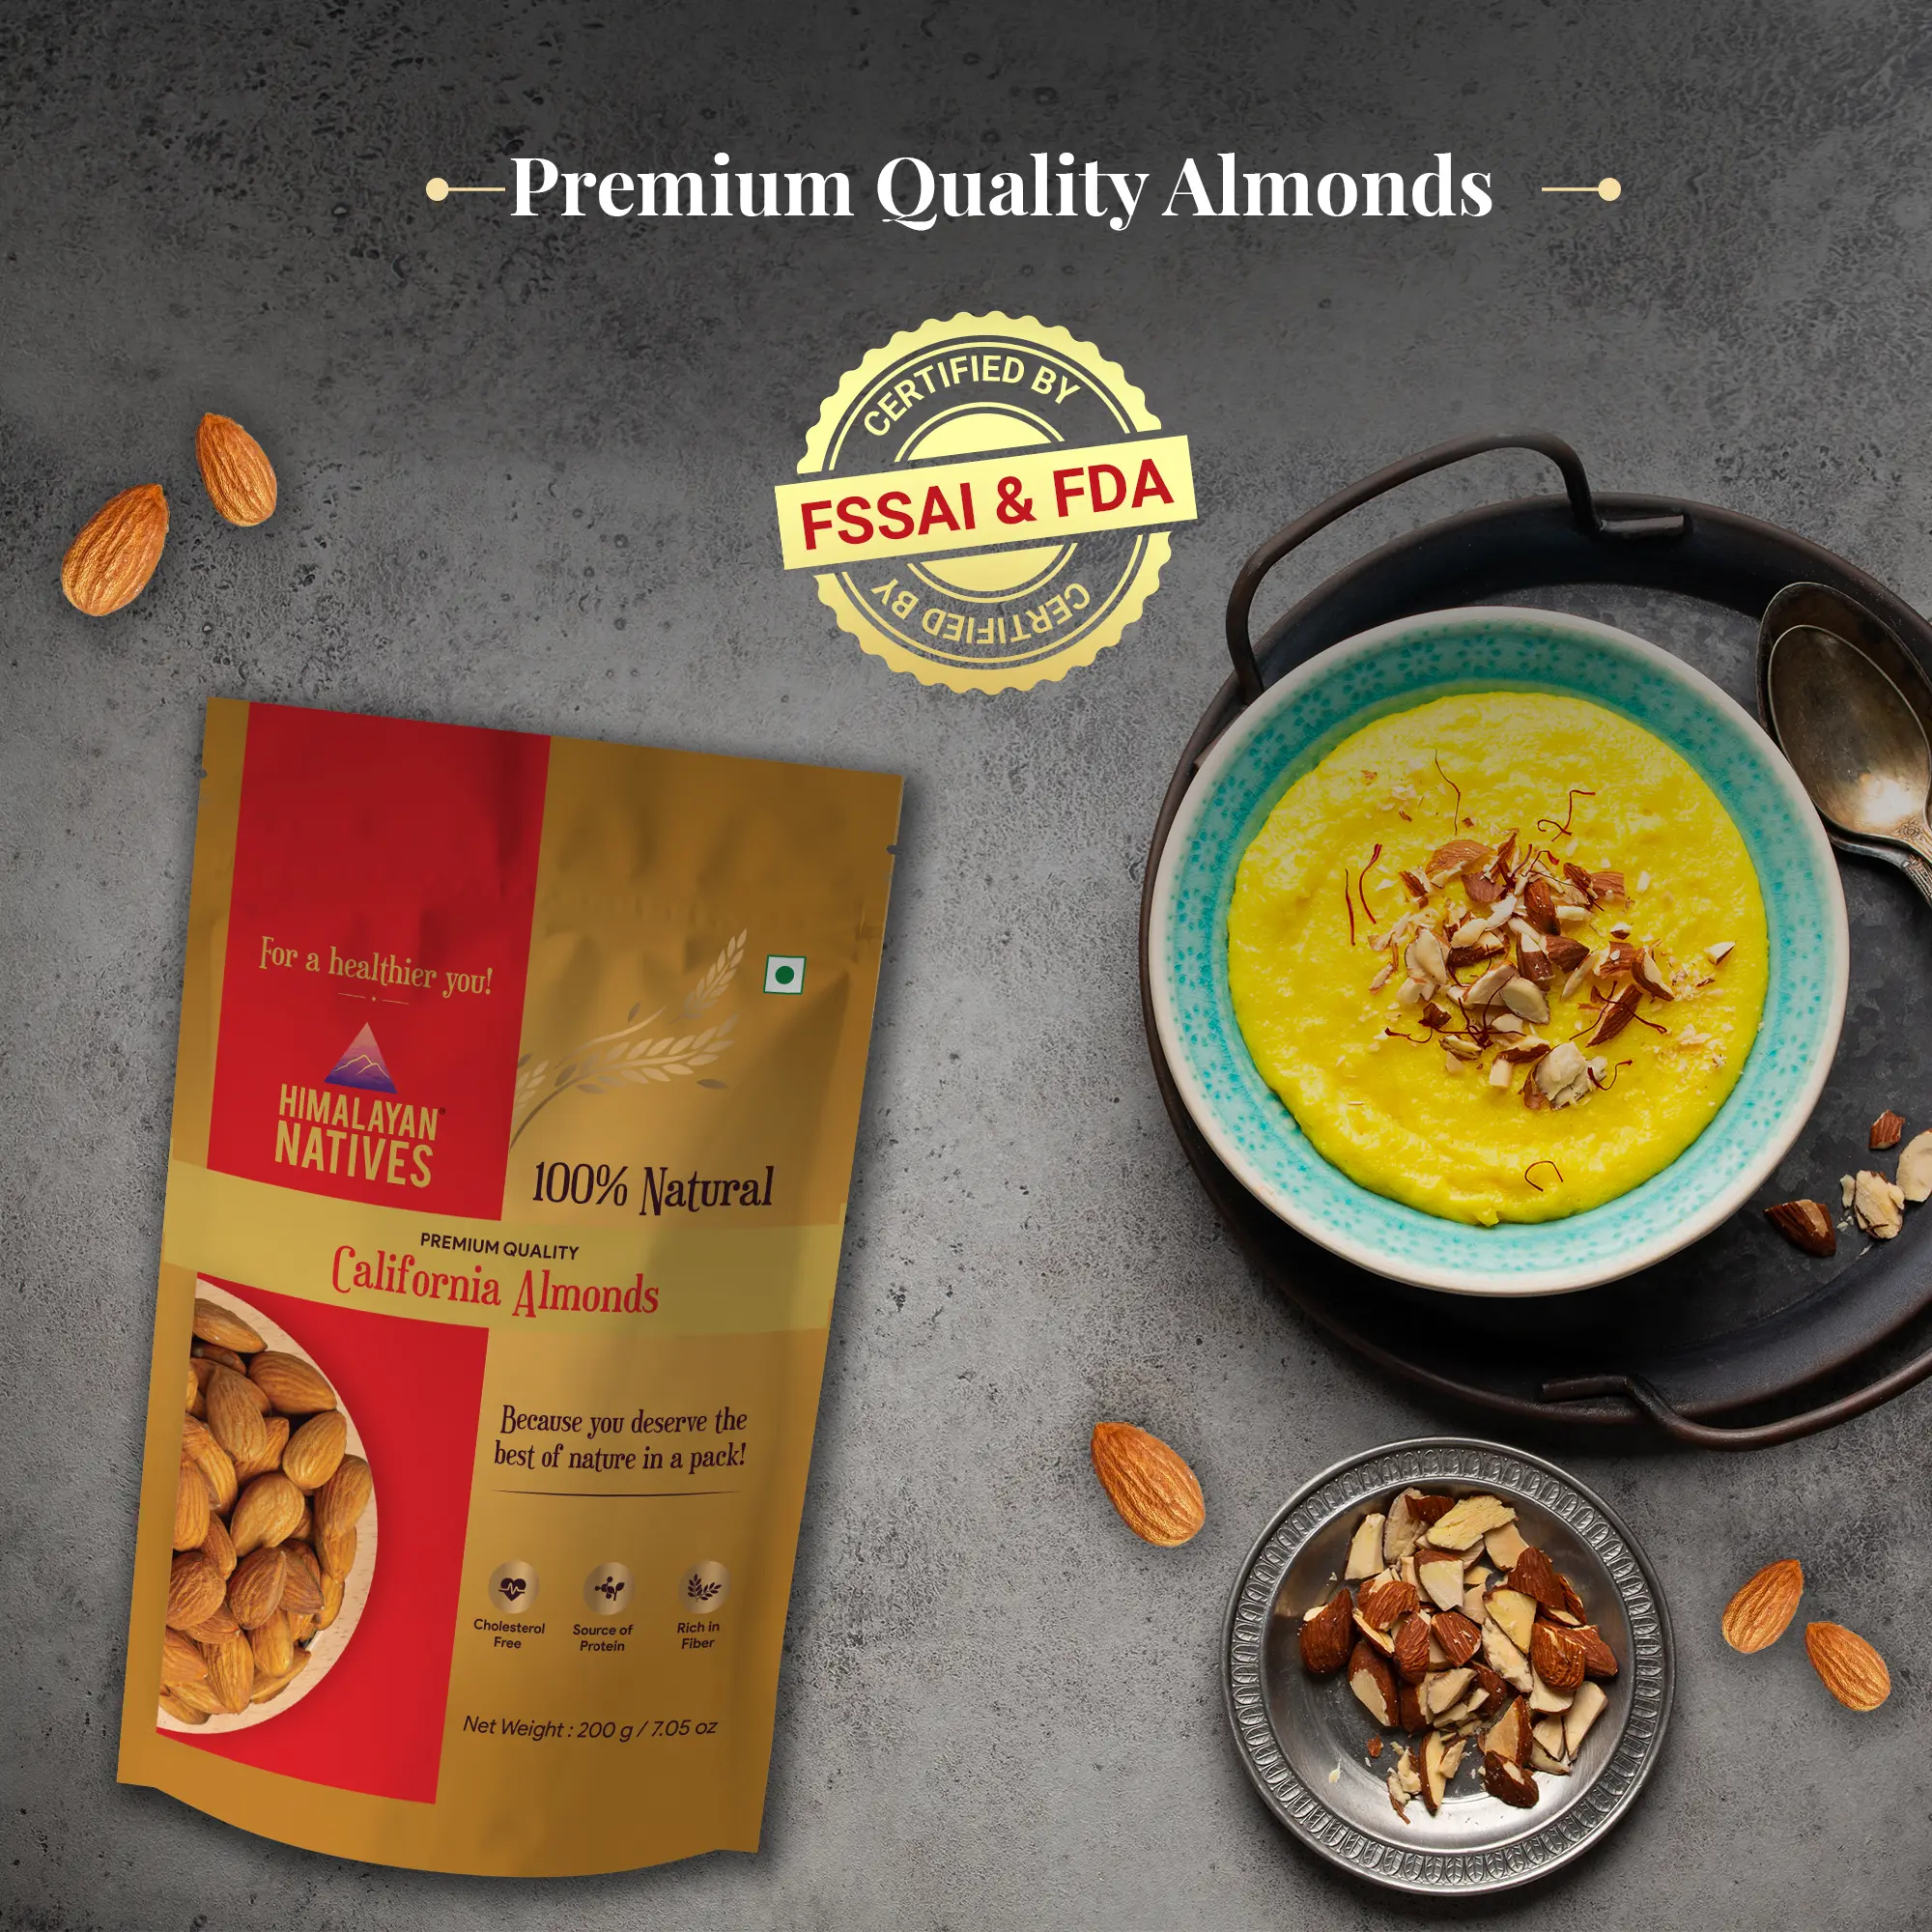 Premium Quality Almonds